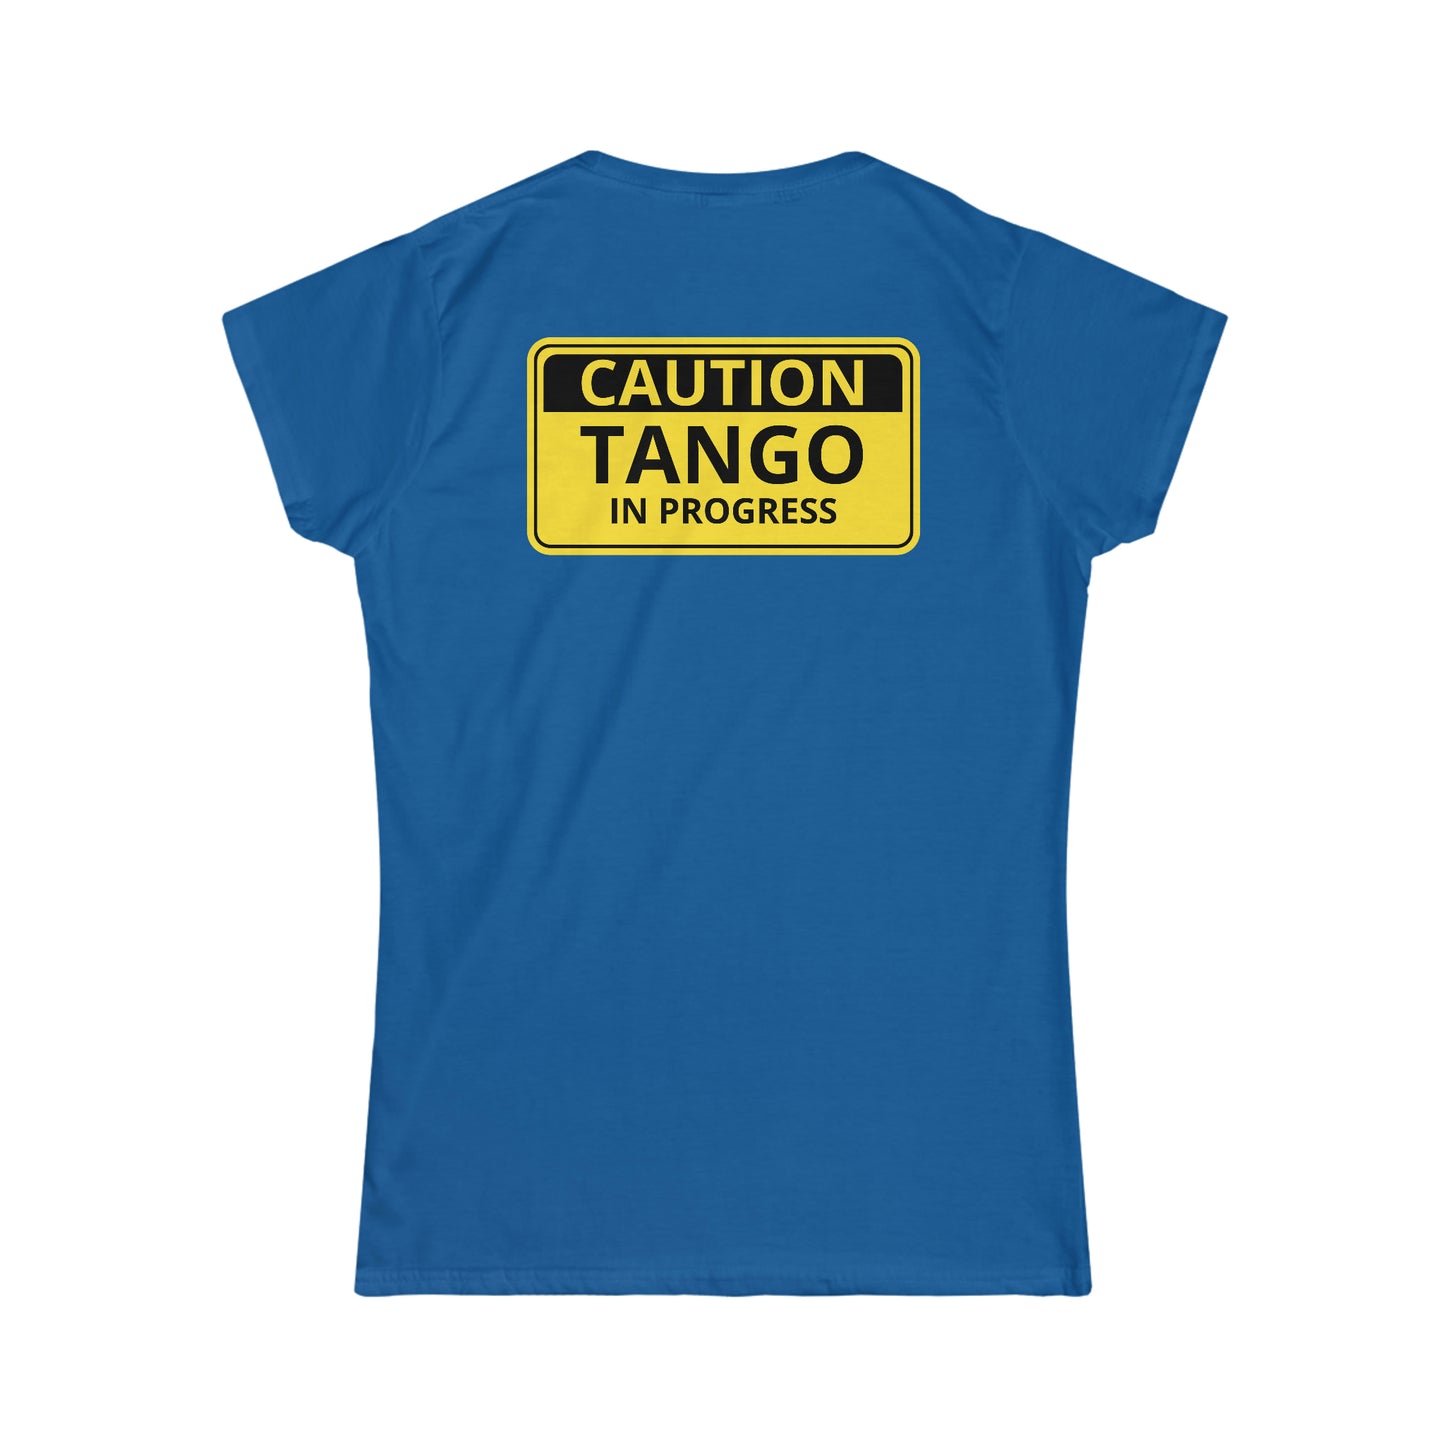 Women's Tee - Caution Tango, BACK PRINT